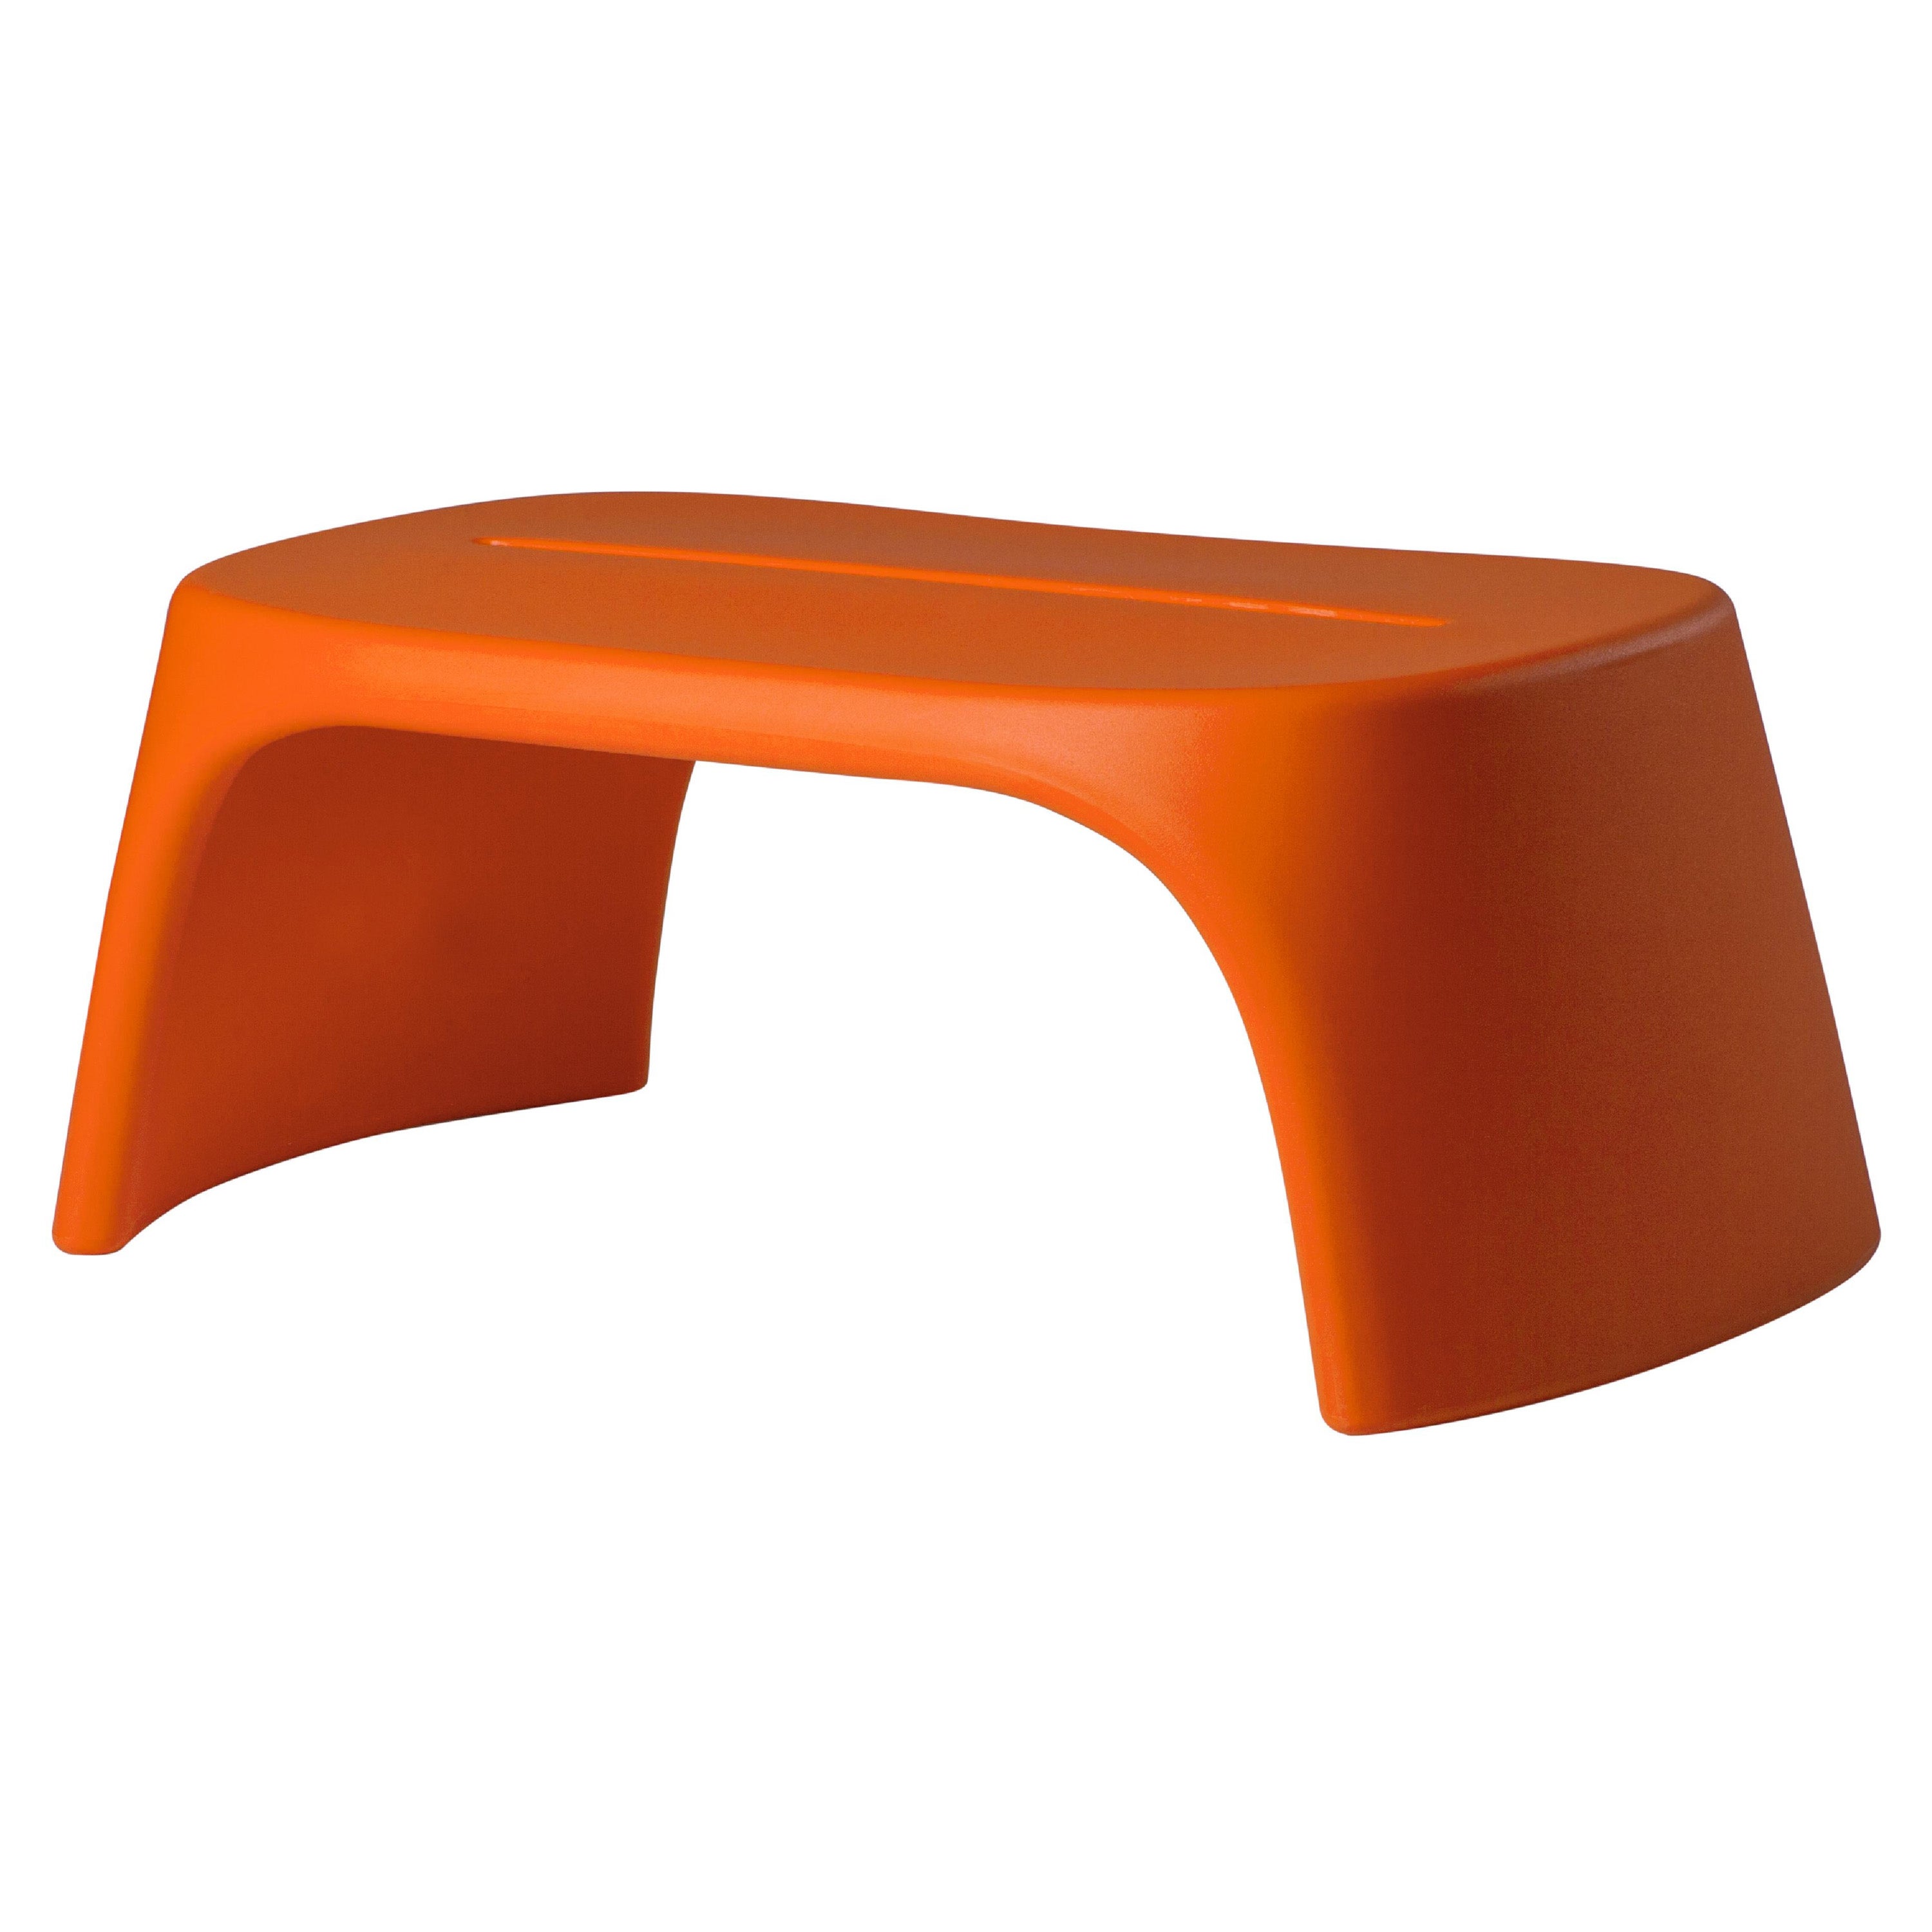 Slide Design Amélie Panchetta Bench in Pumpkin Orange by Italo Pertichini For Sale